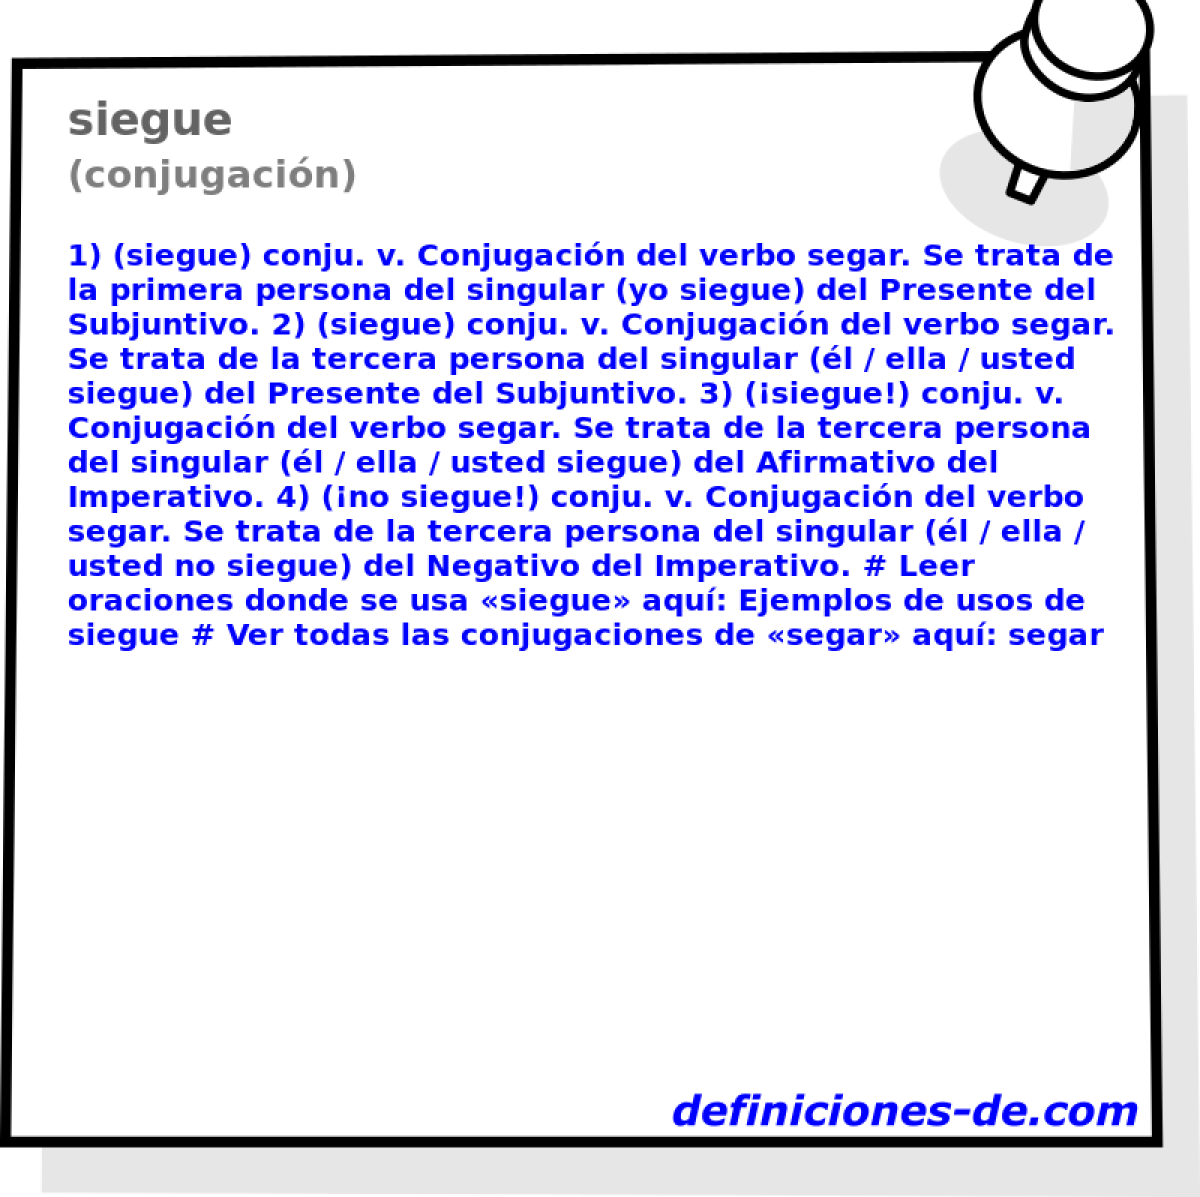 siegue (conjugacin)